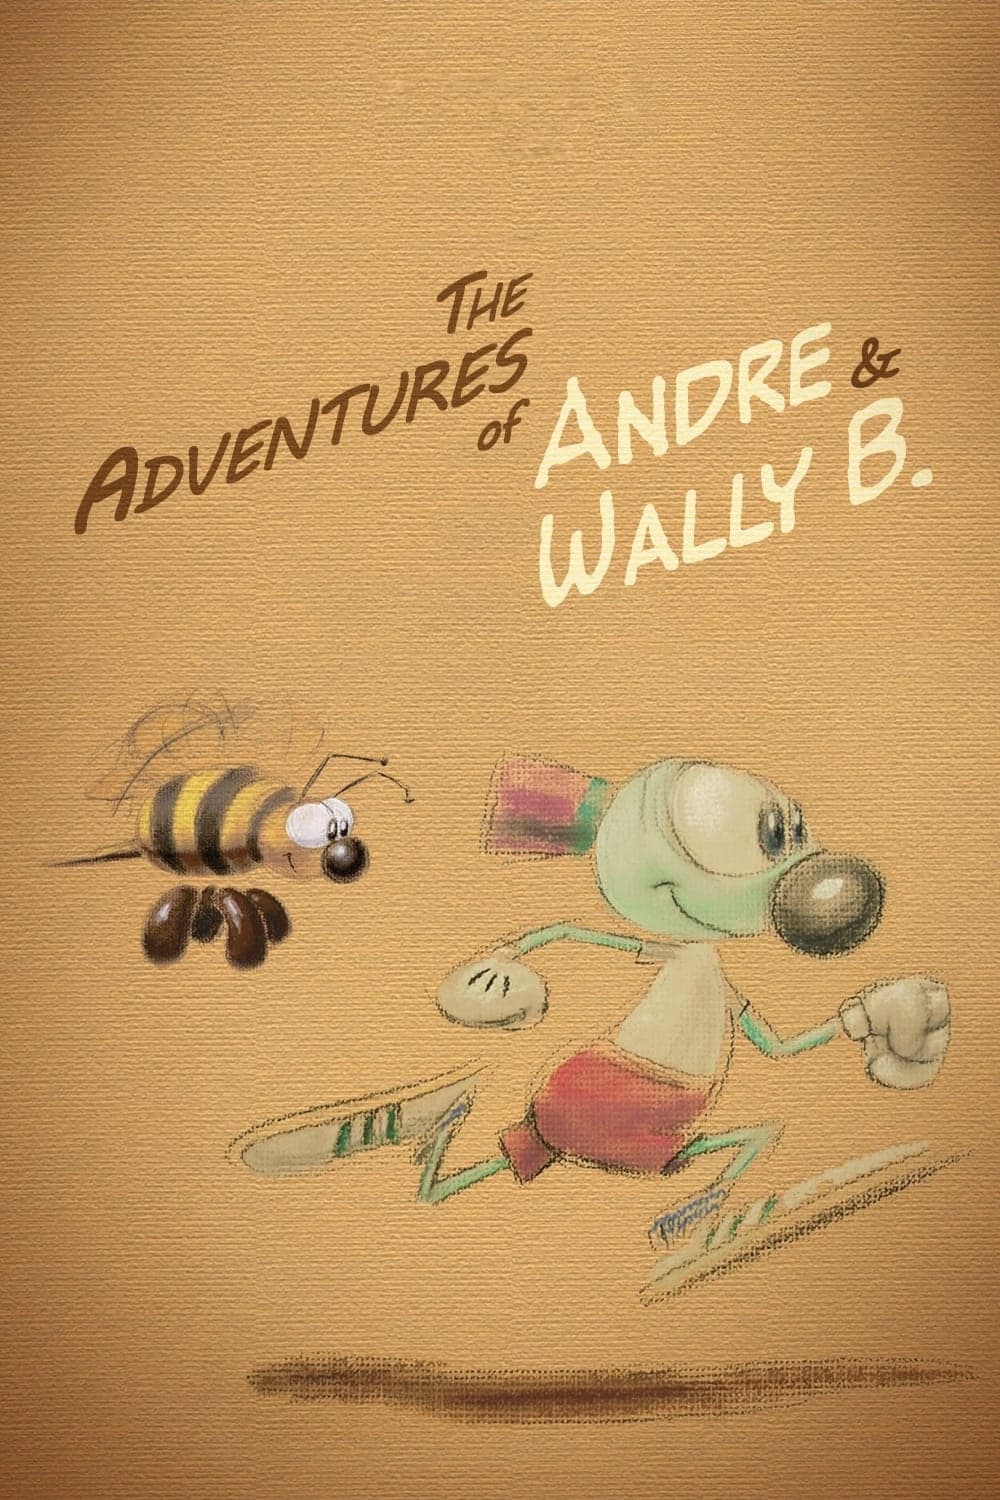 Les Aventures d'André & Wally B.